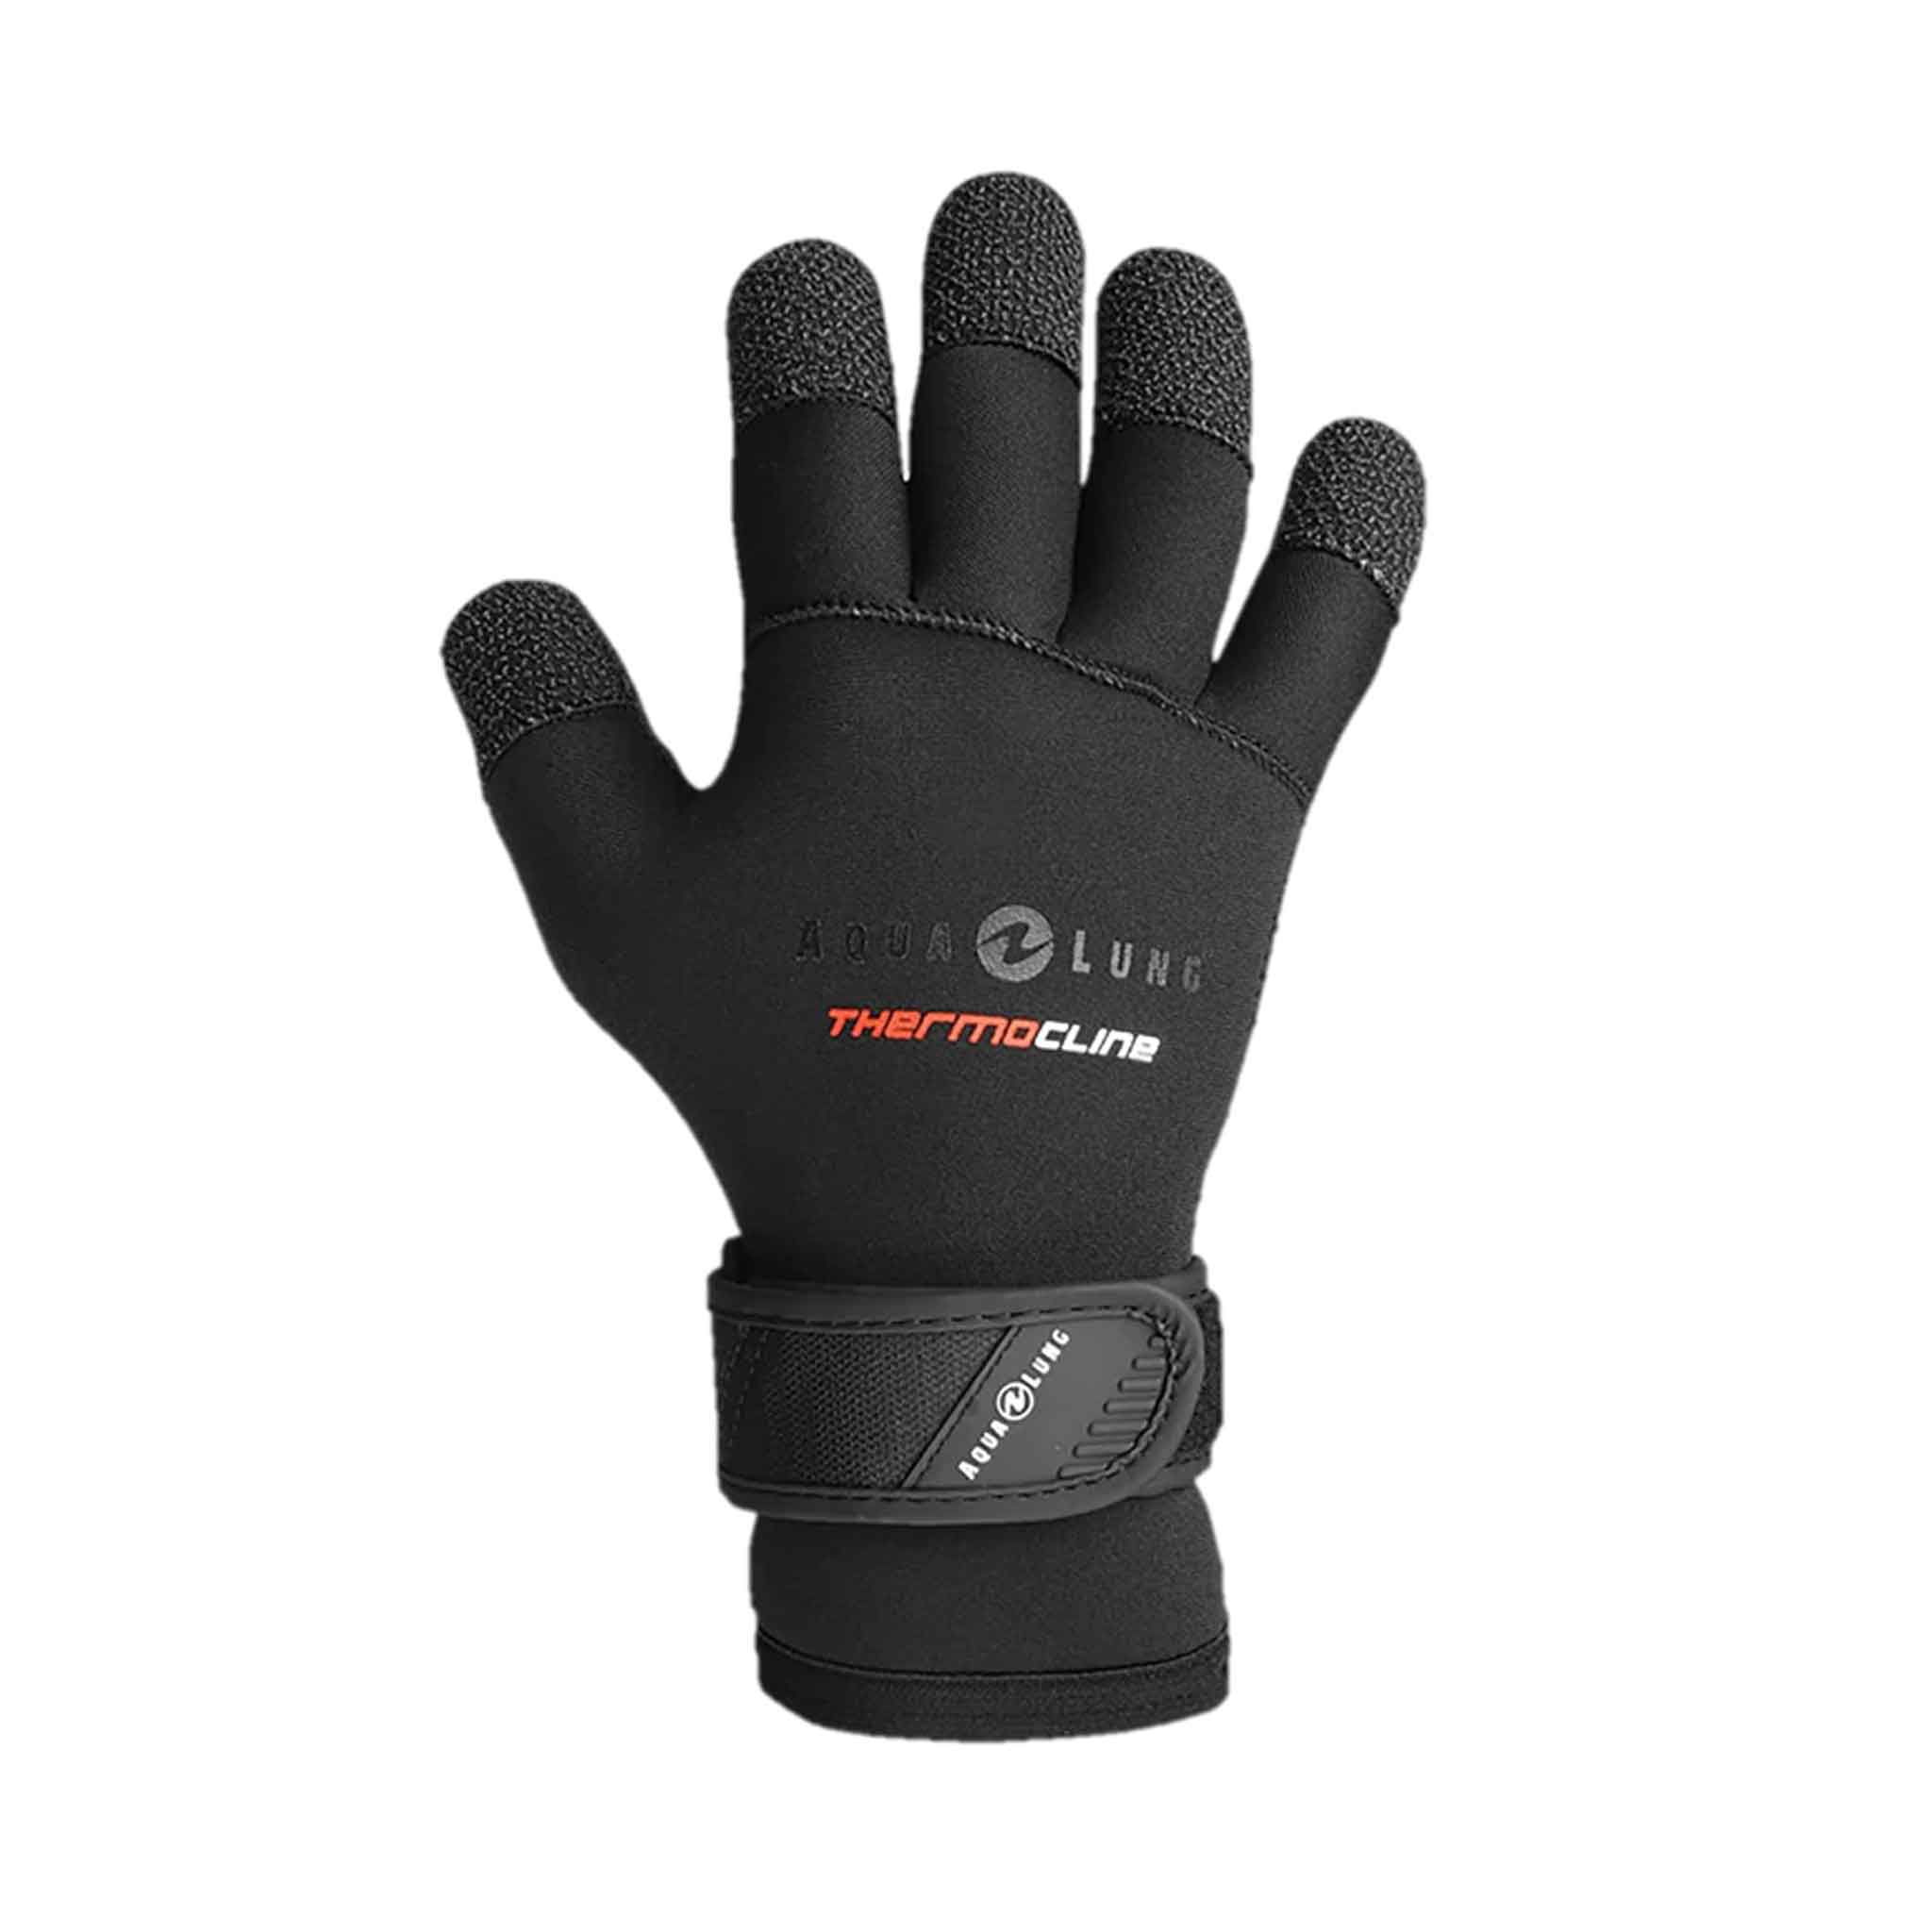 Dyneema Tuff Diving Gloves - Anti-Cut Protection